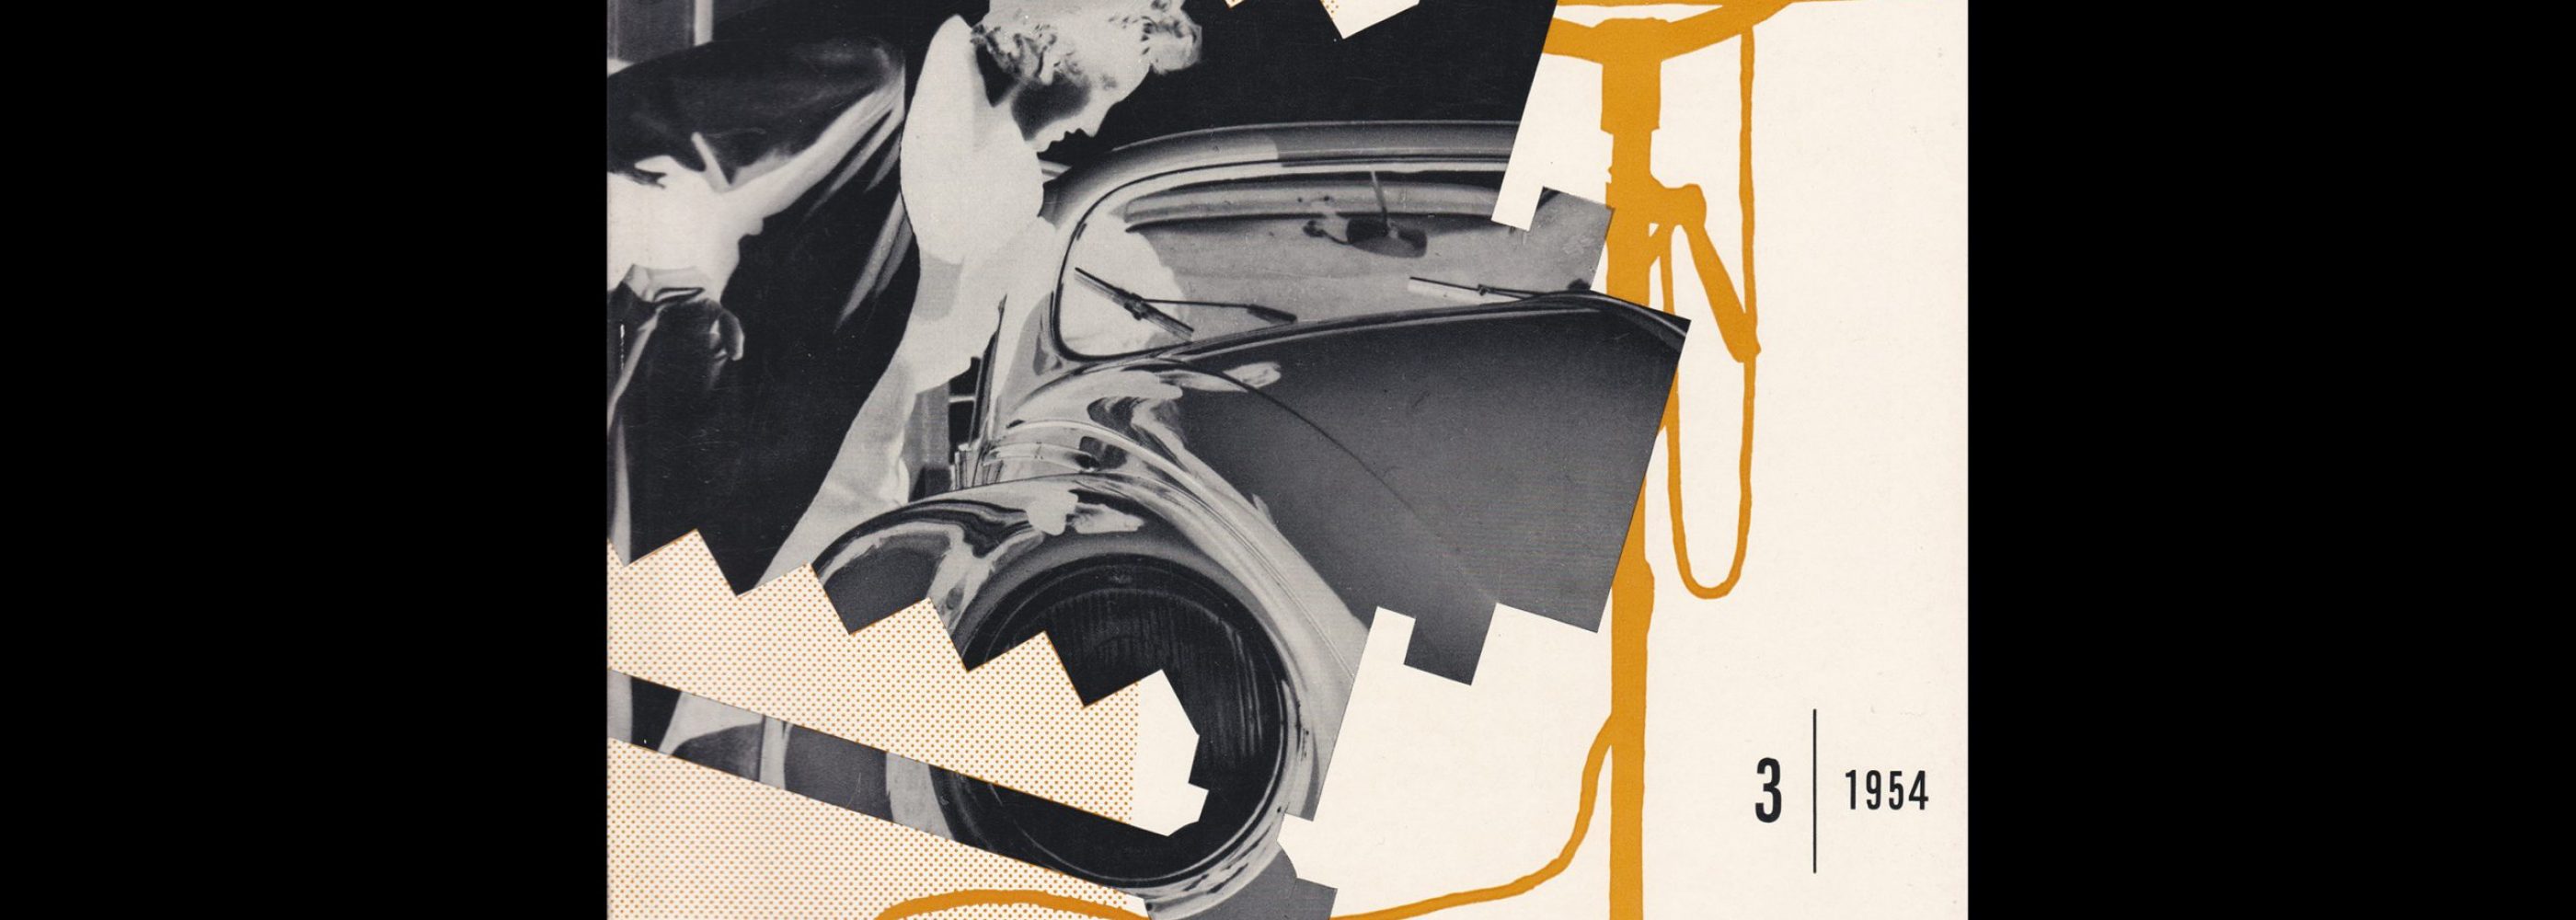 Graphik - Werbung + Formgebung, 3, 1954. Cover design by Ewald Hoinkis